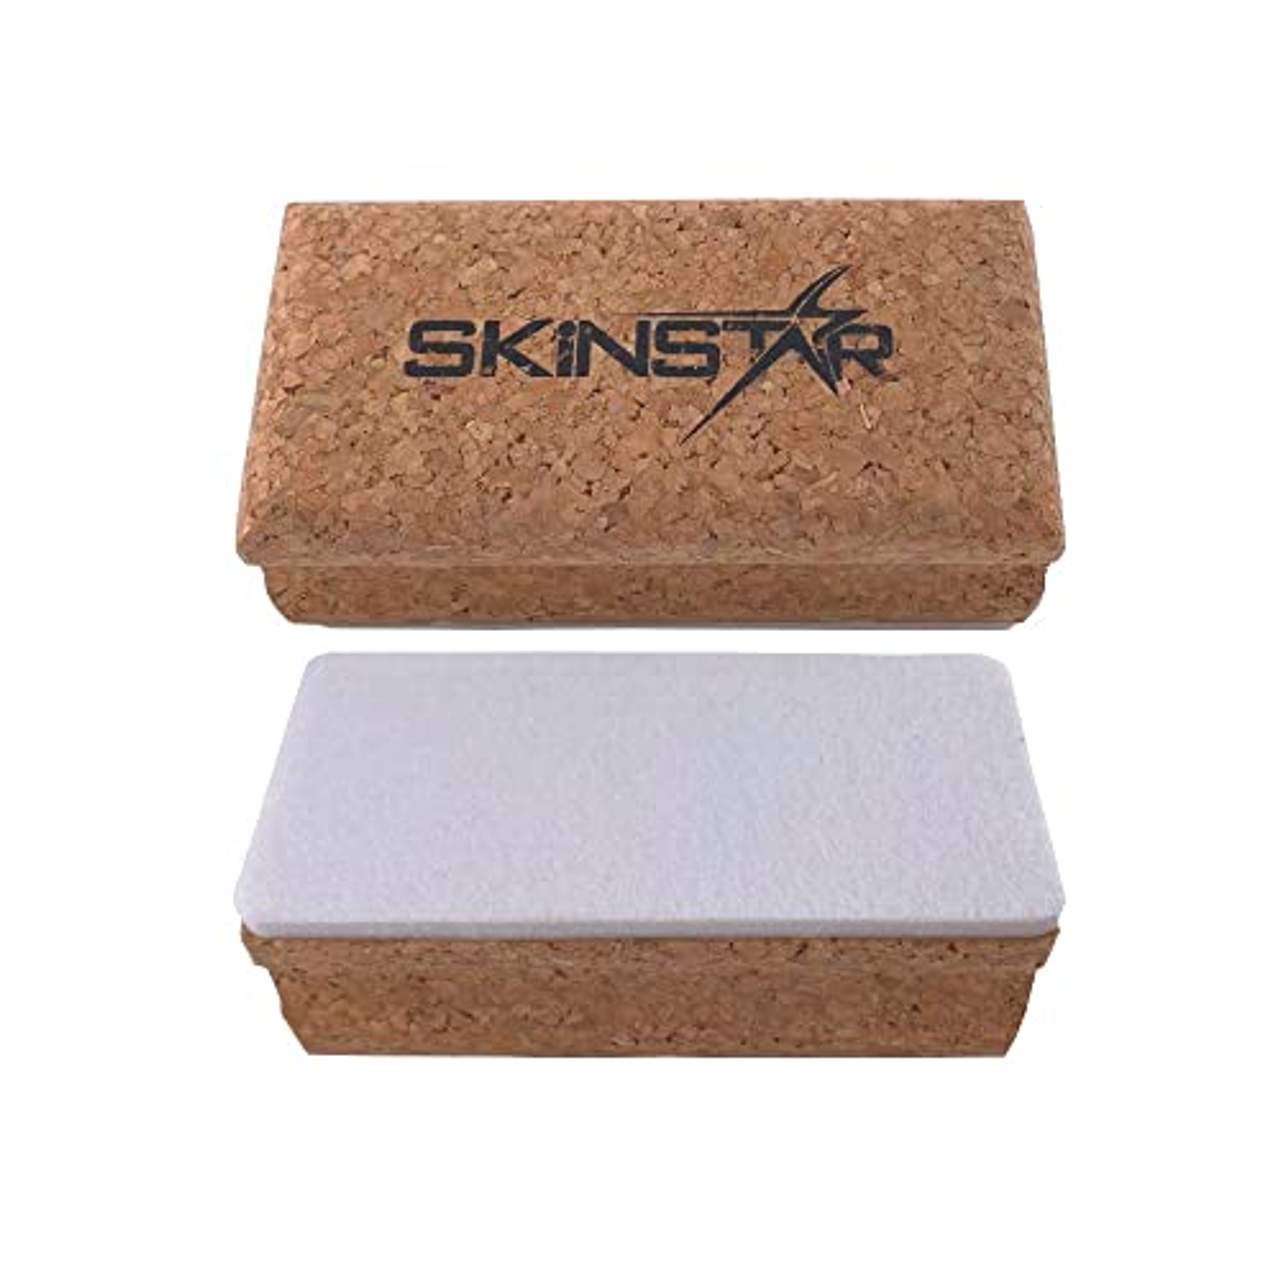 SkinStar Starter Set Skituning-Komplettset Alpin Classic